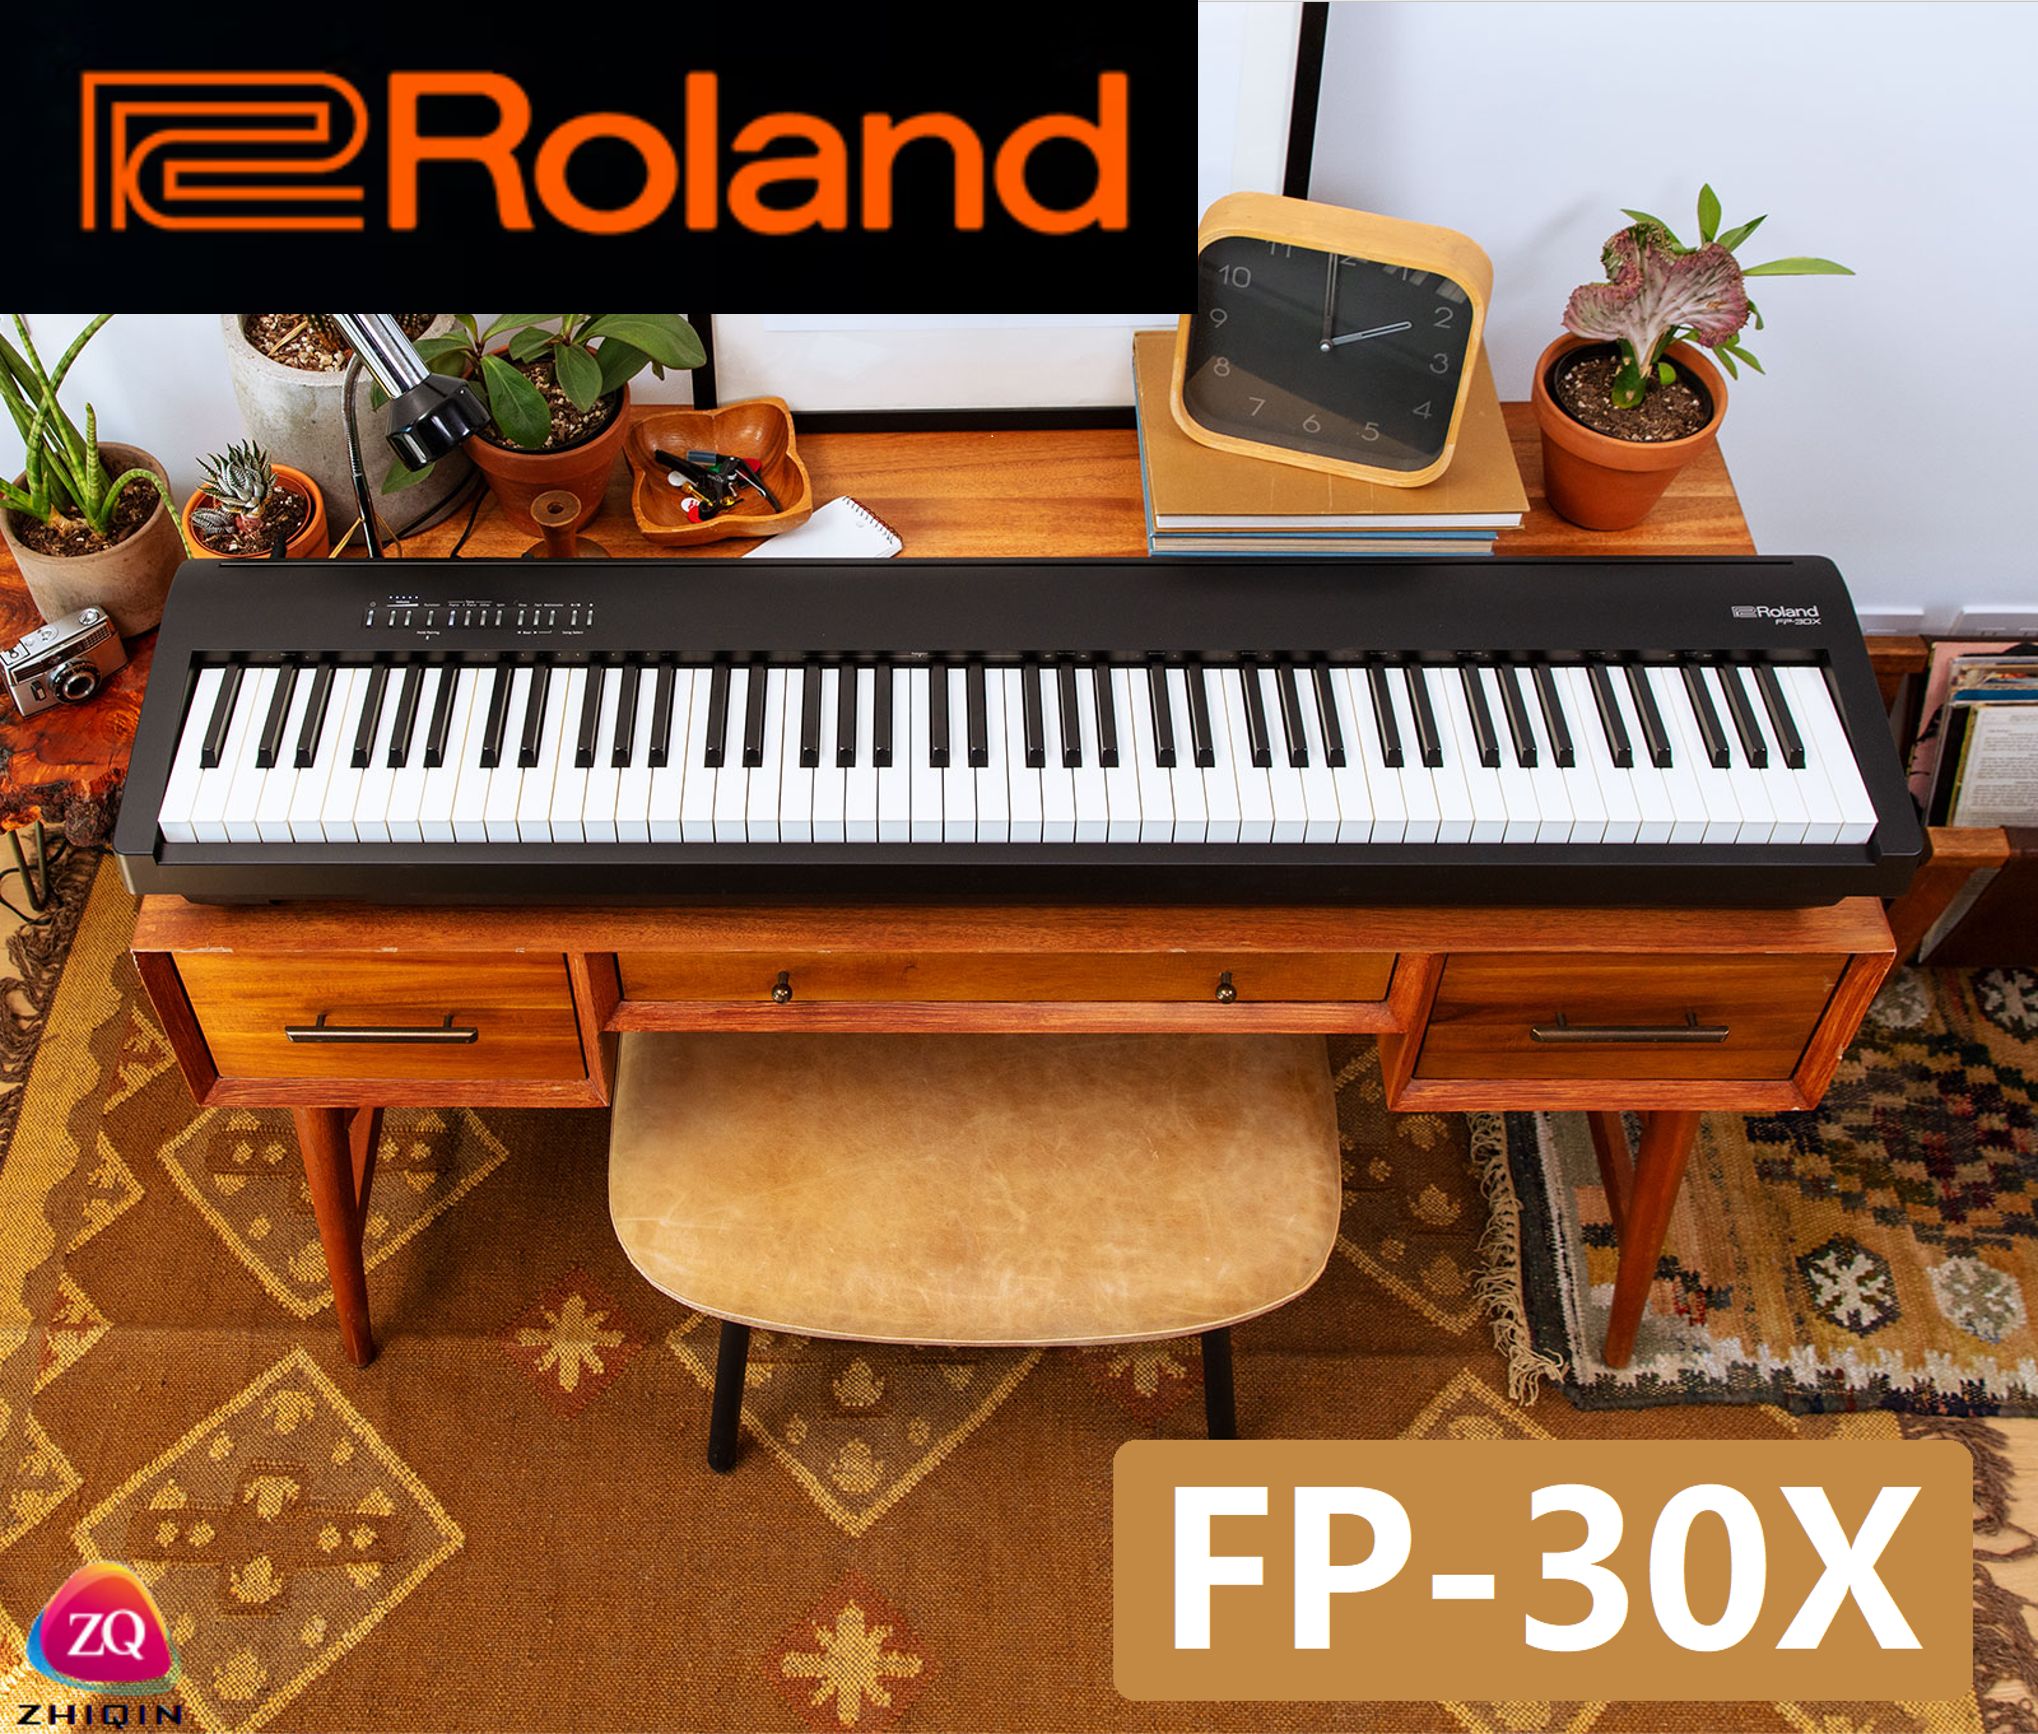 RolandFP30XЦифровоепианино88-клавишноетяжелоепортативное